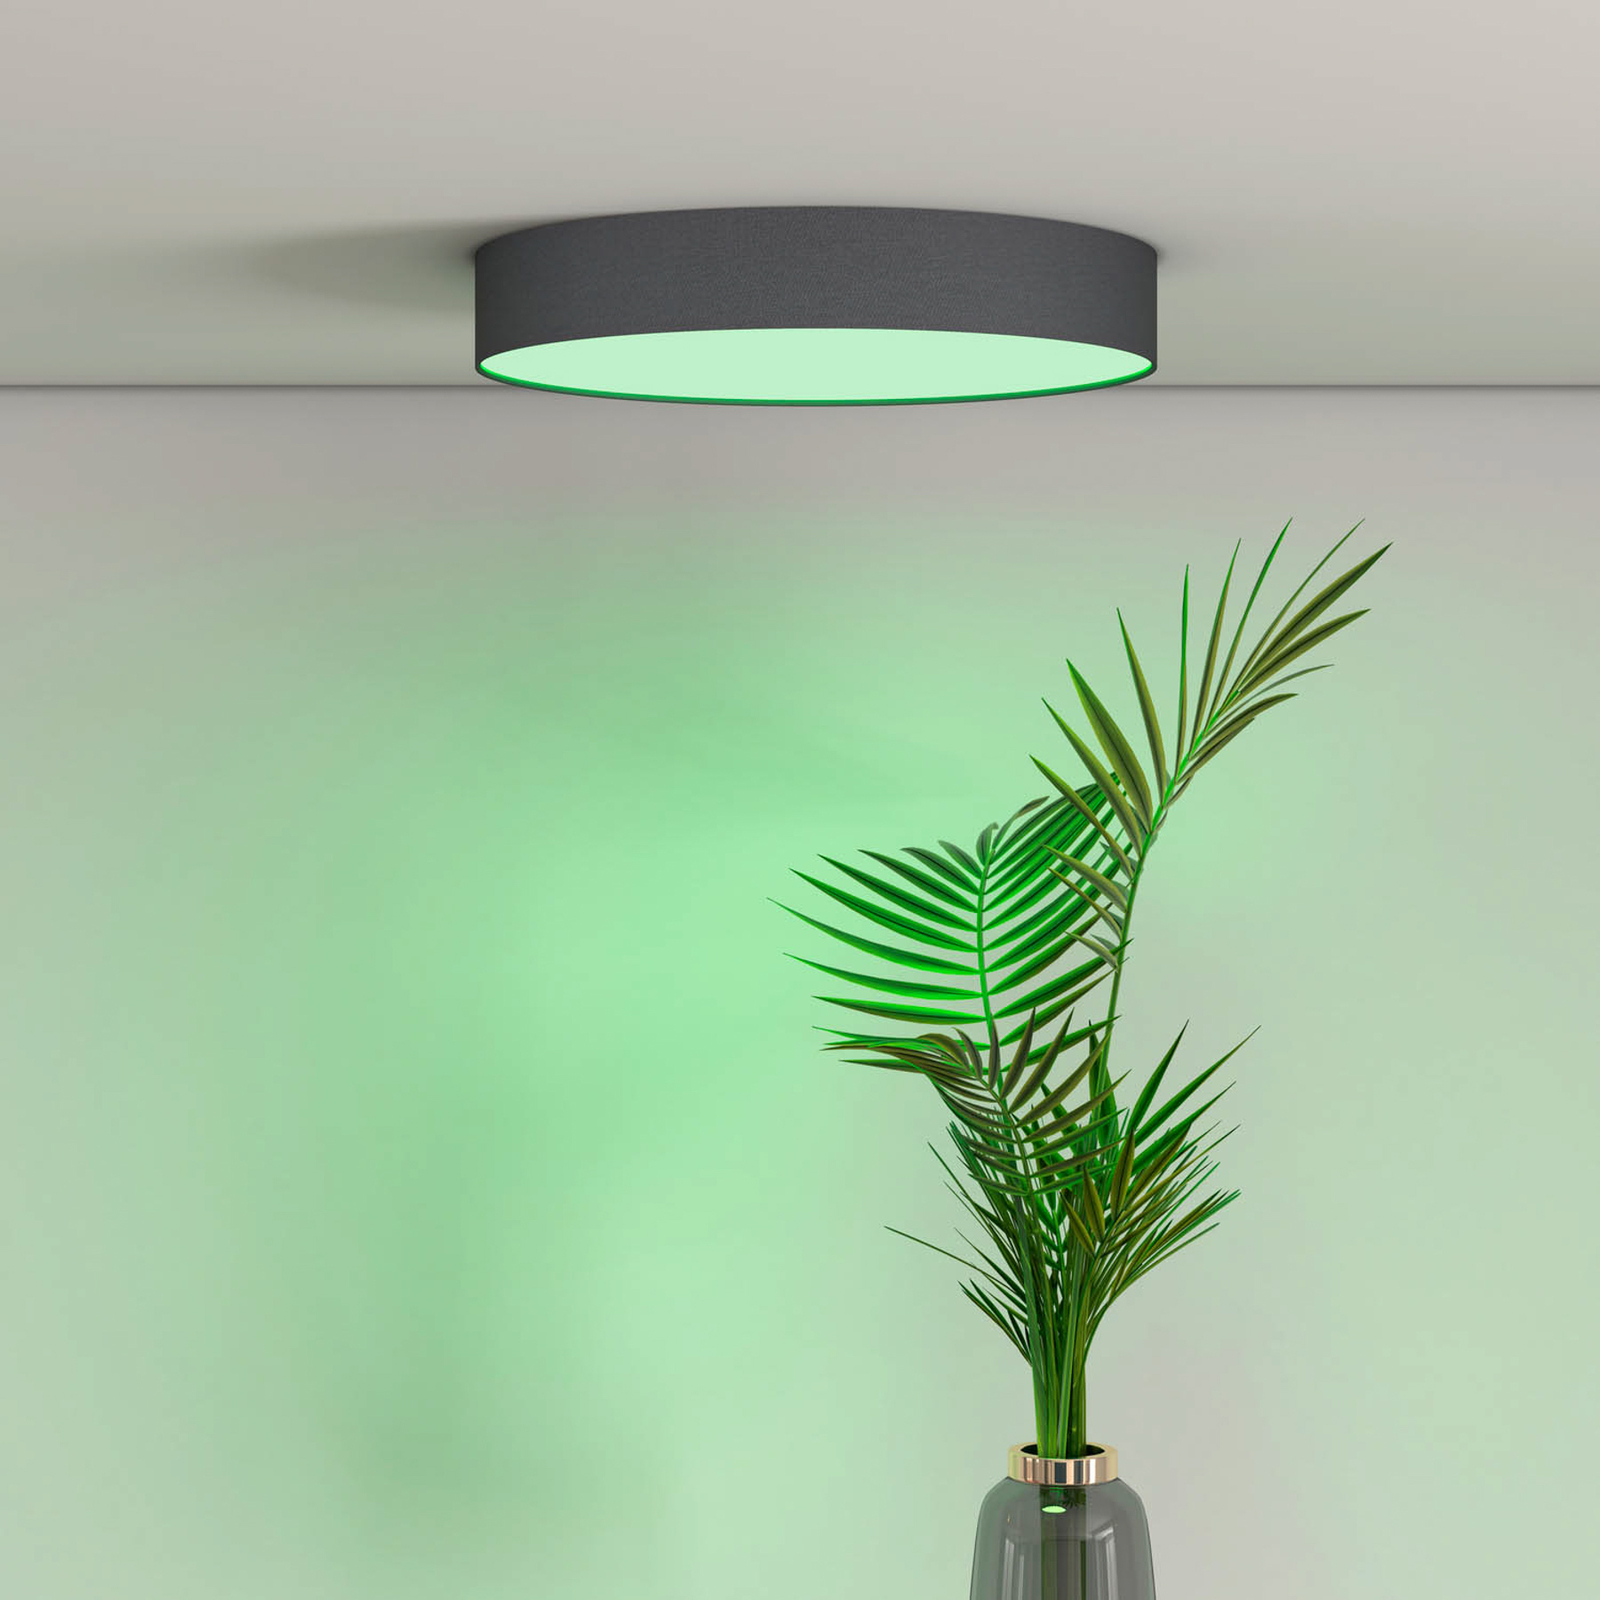 Calex Smart Fabric LED-taklampa, 30 cm